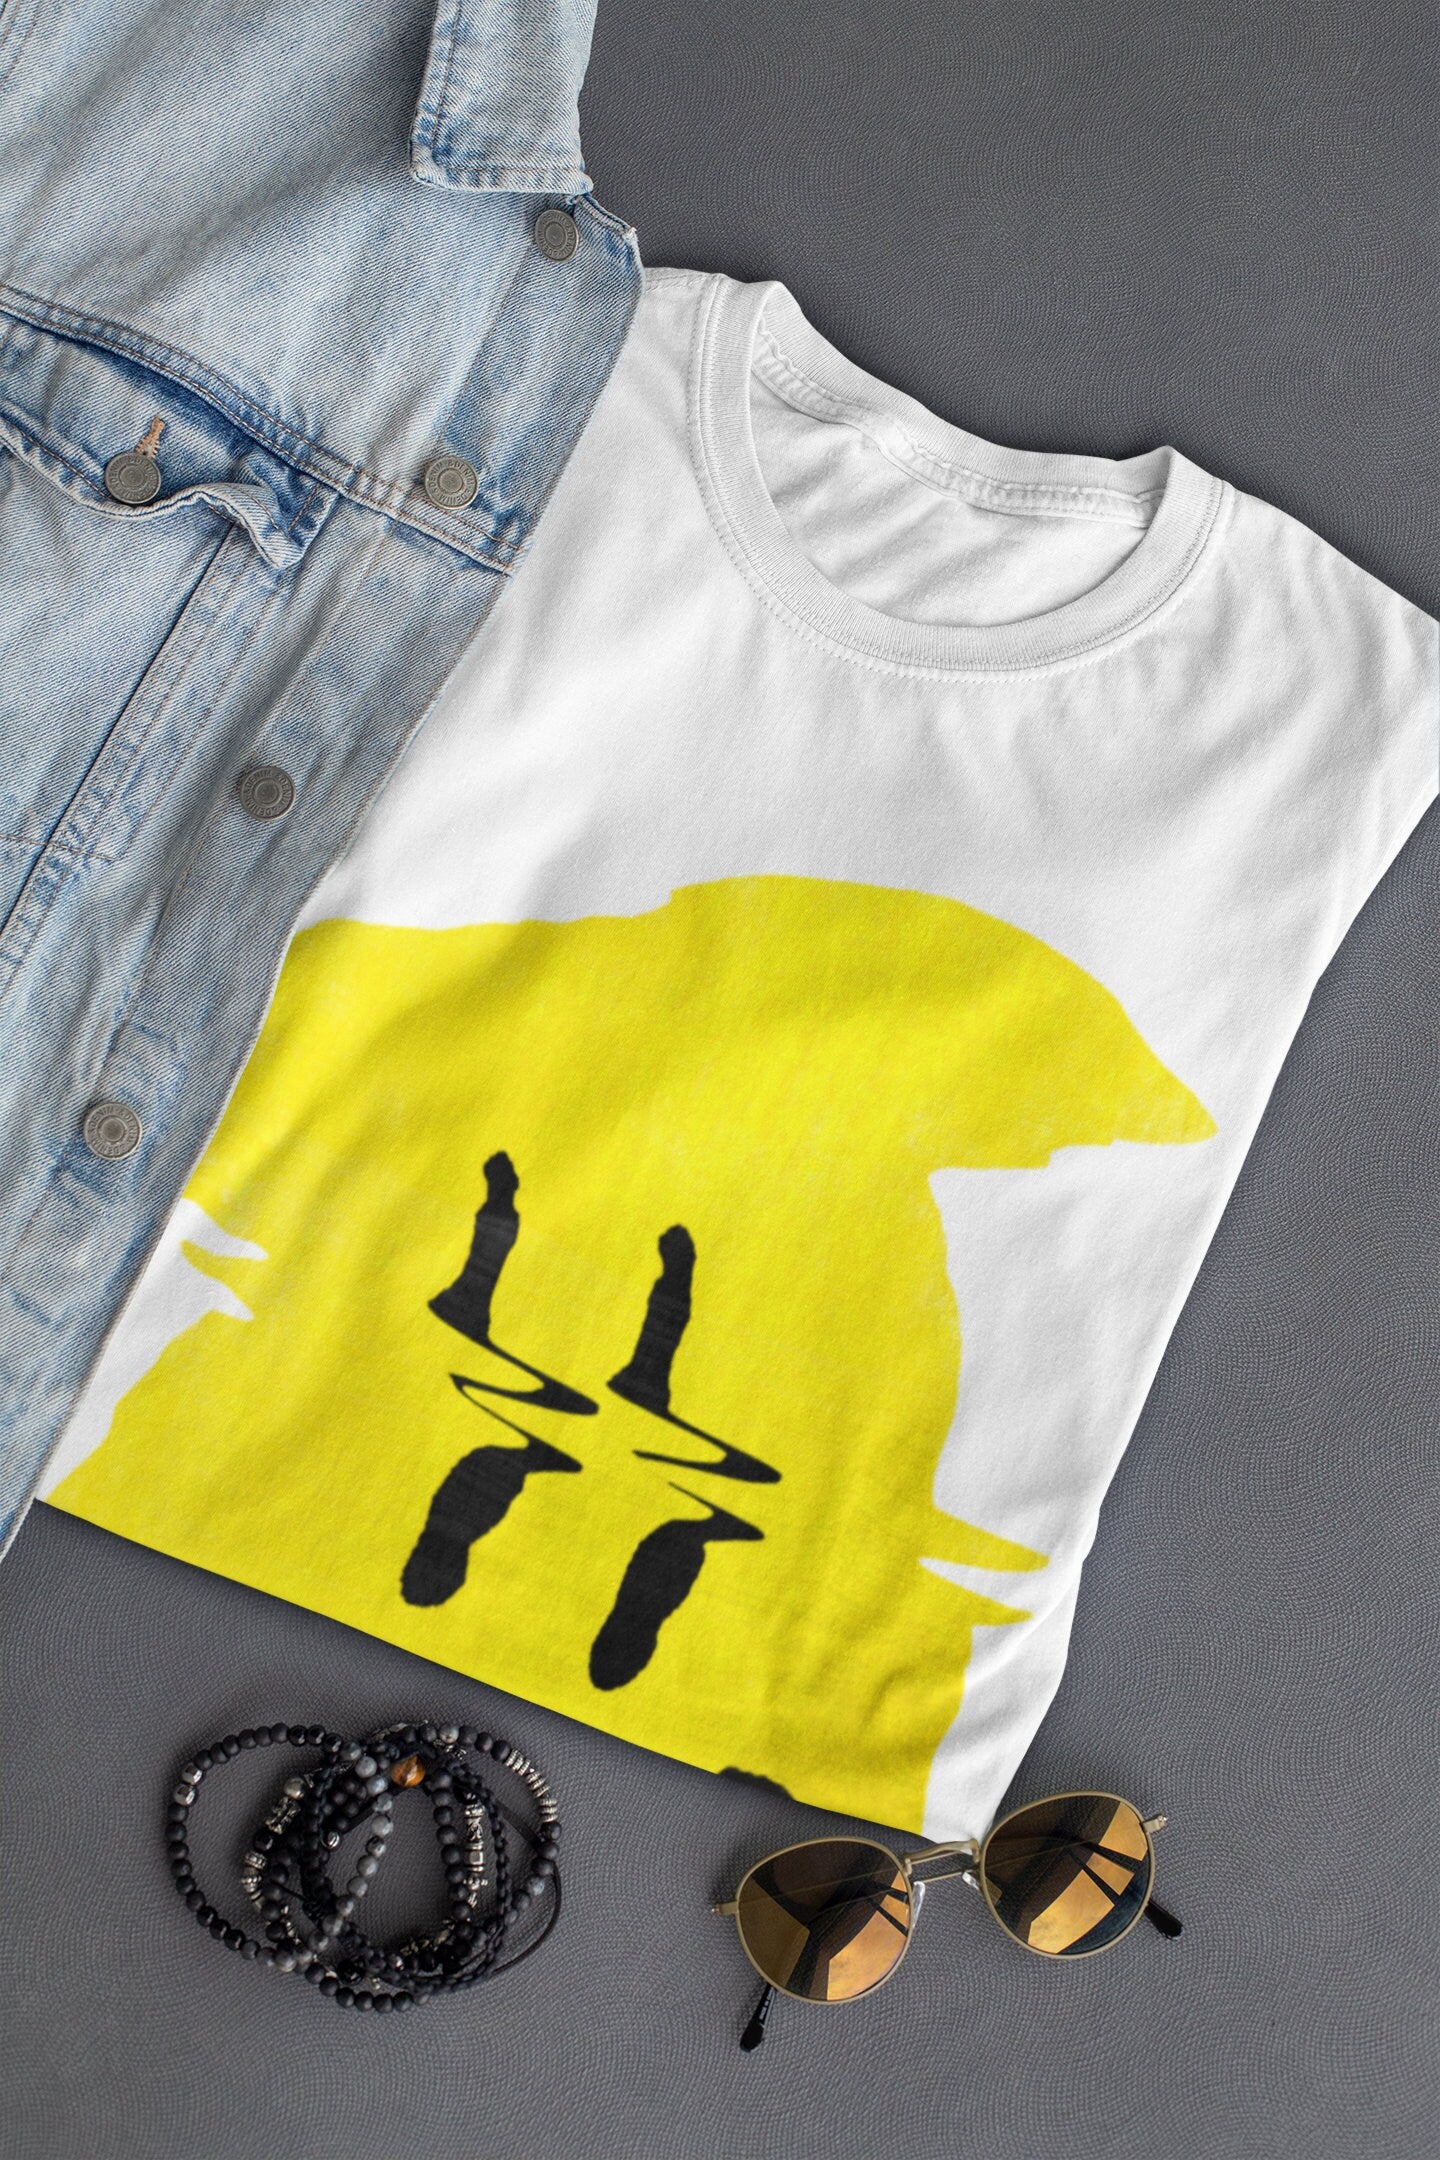 Glitch Smiley Men's T-shirt, Mens Graphic Tees, Funny Smiley T Shirt, Pop Art Mens TShirt, Humor T-Shirt, Original Illustration By Ali Gulec